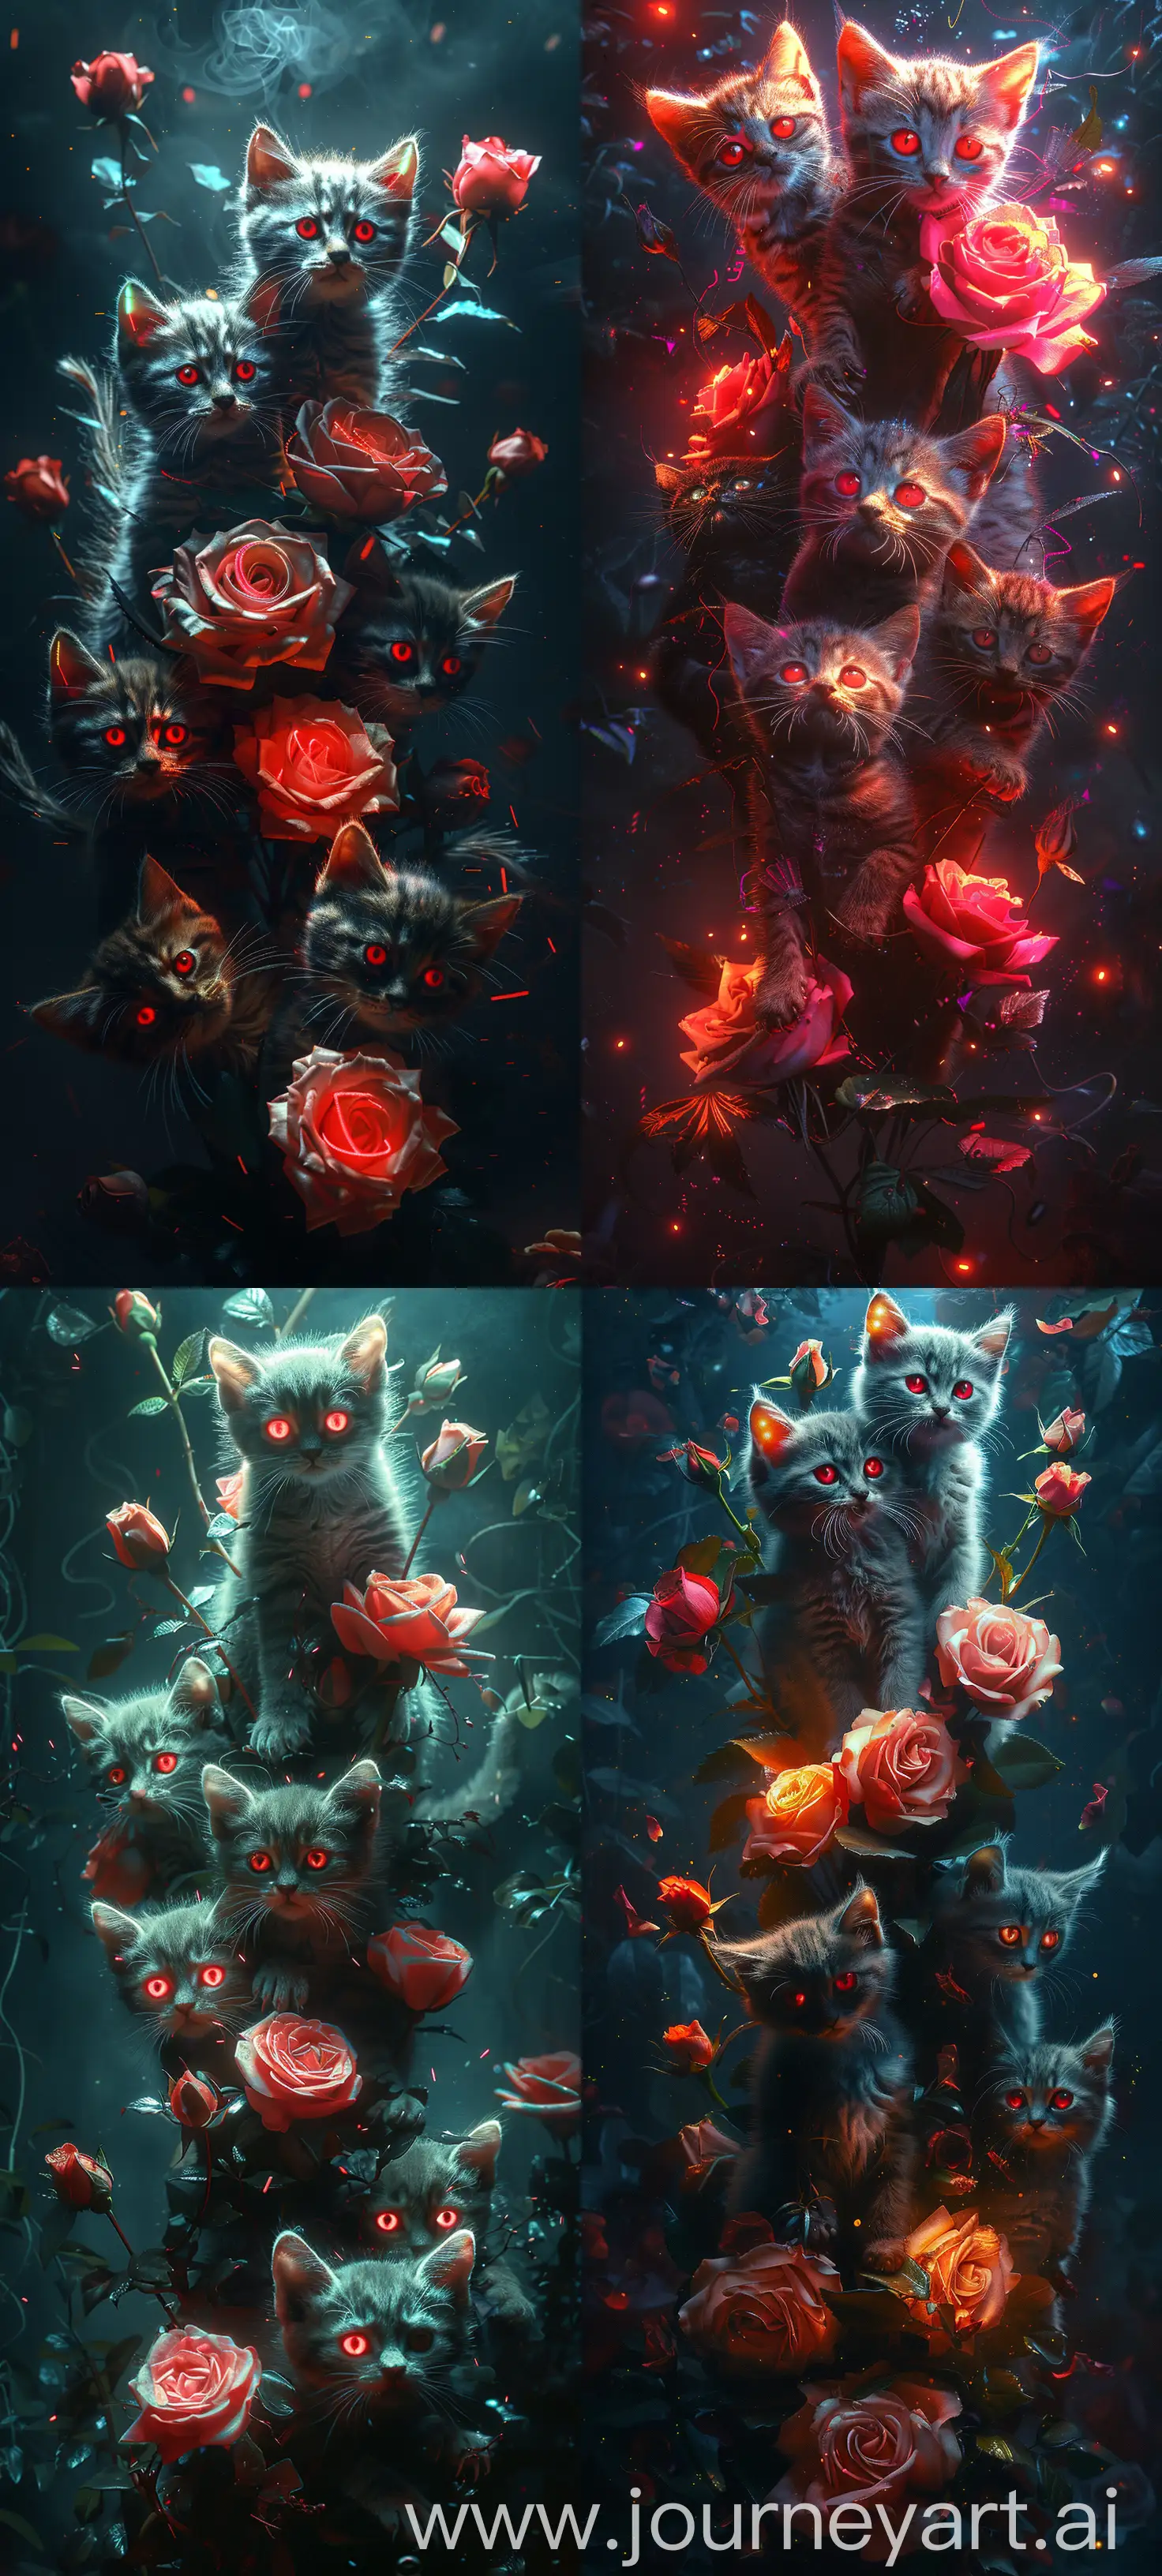 Cyberpunk-Kittens-with-Glowing-Red-Eyes-in-Neon-Rose-Bouquet